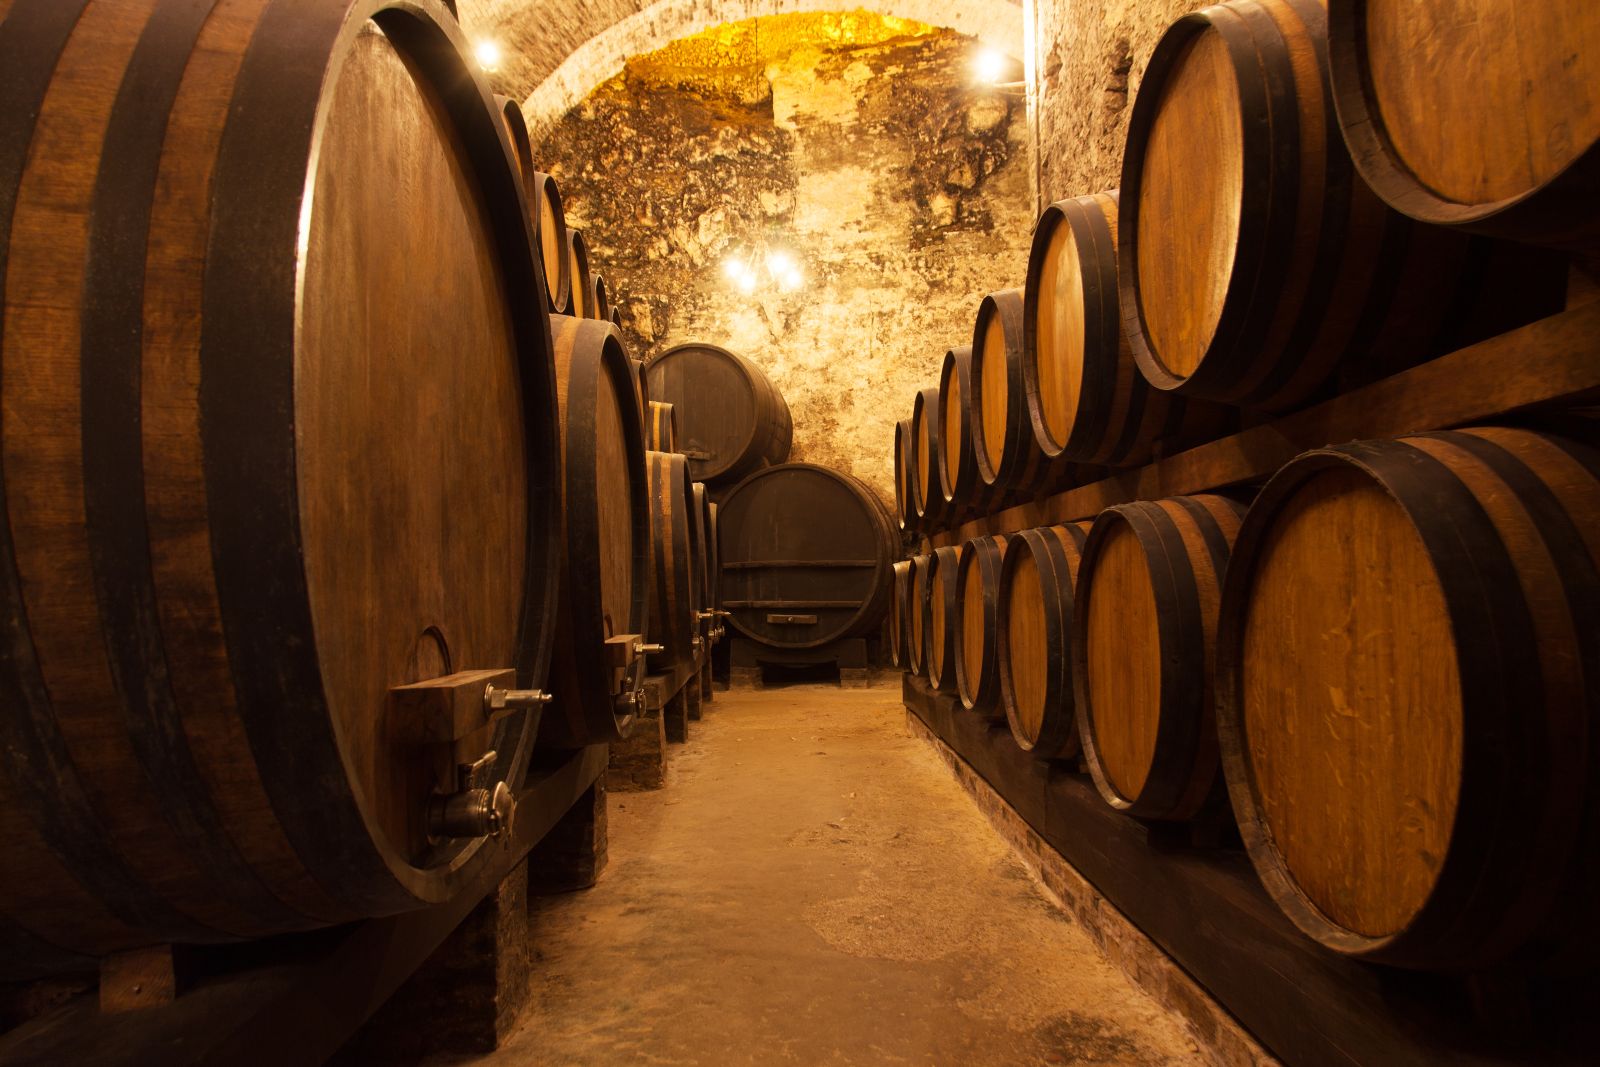 Wine barrels in Argentina